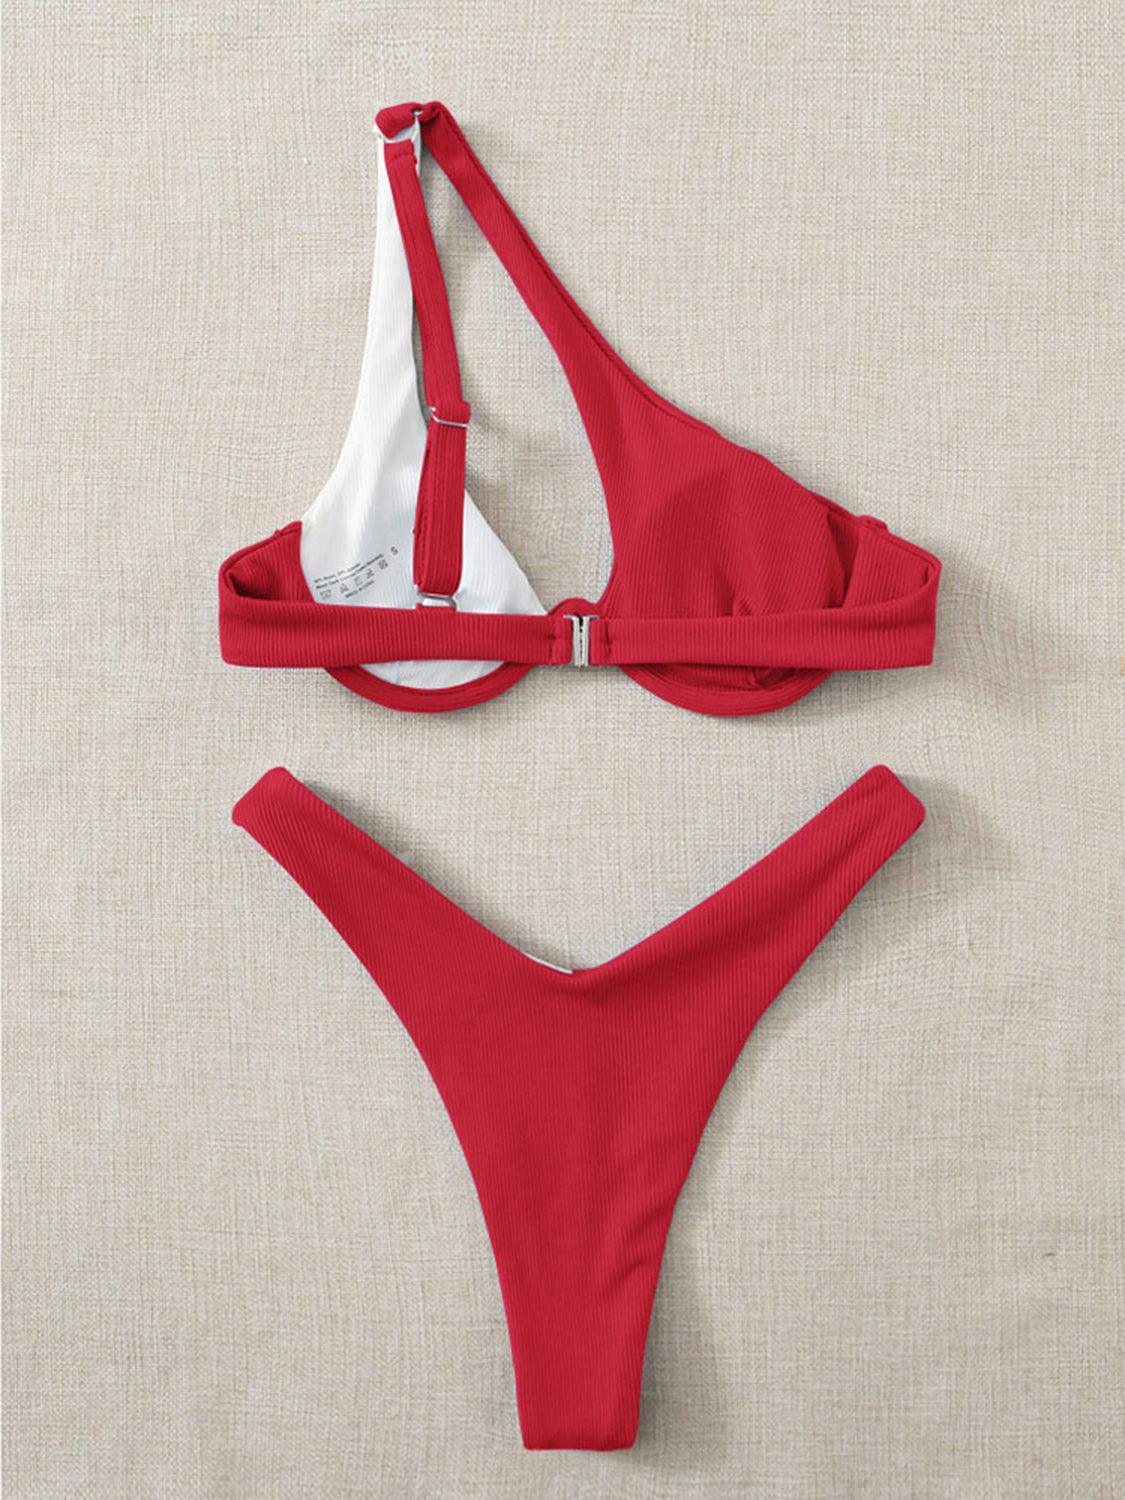 a red and white bikini top and bottom